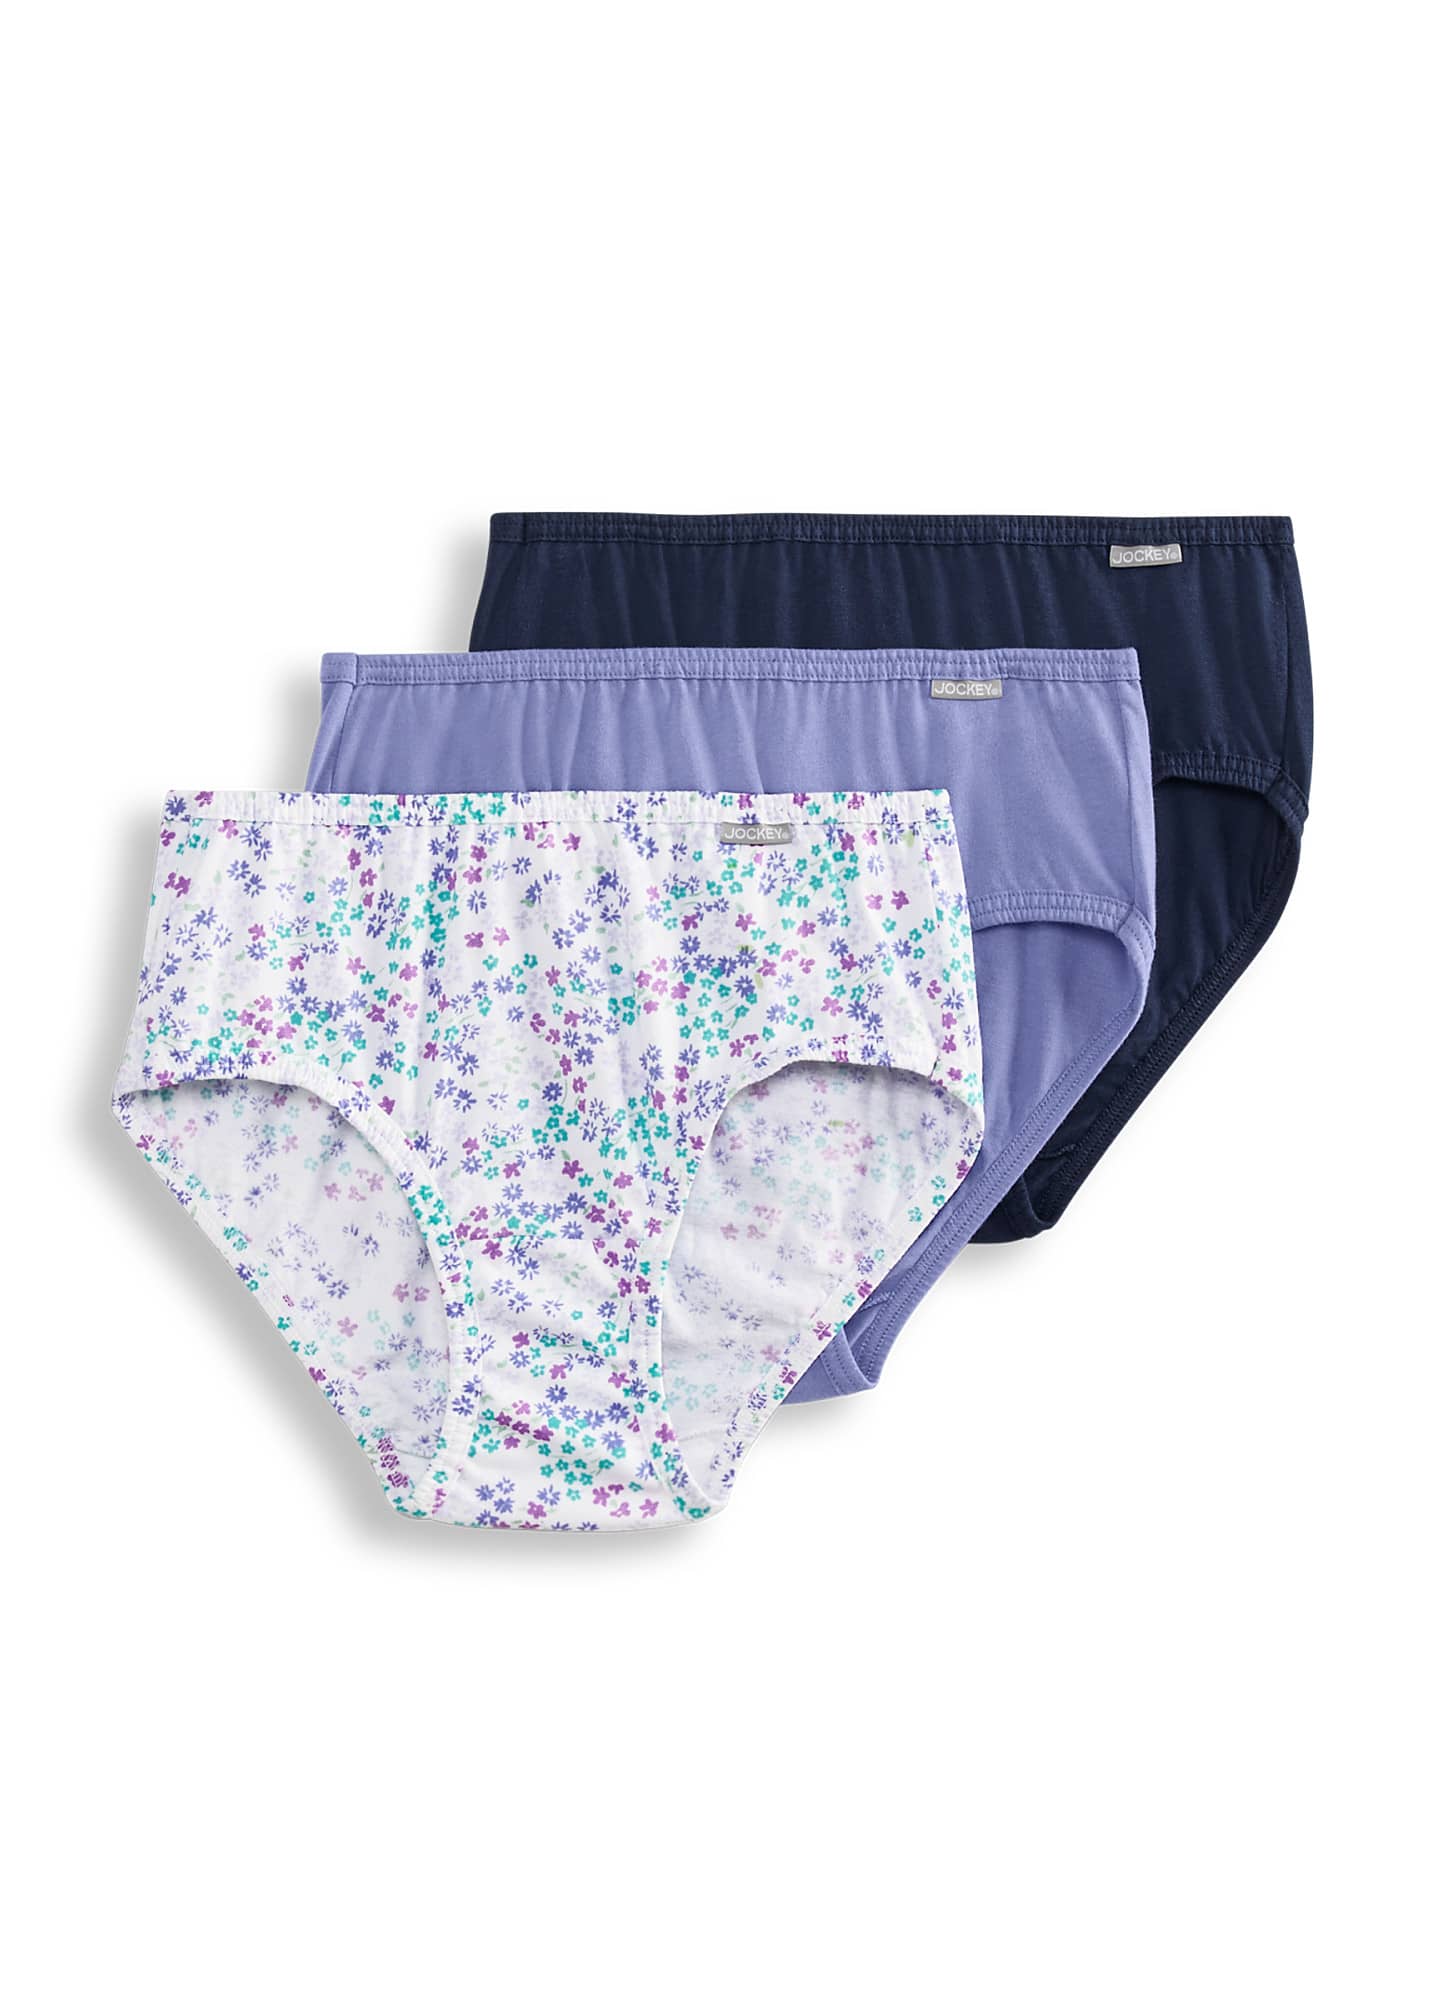 Jockey Panties Women's Underwear Elance Sz 6 HIPSTERS Style